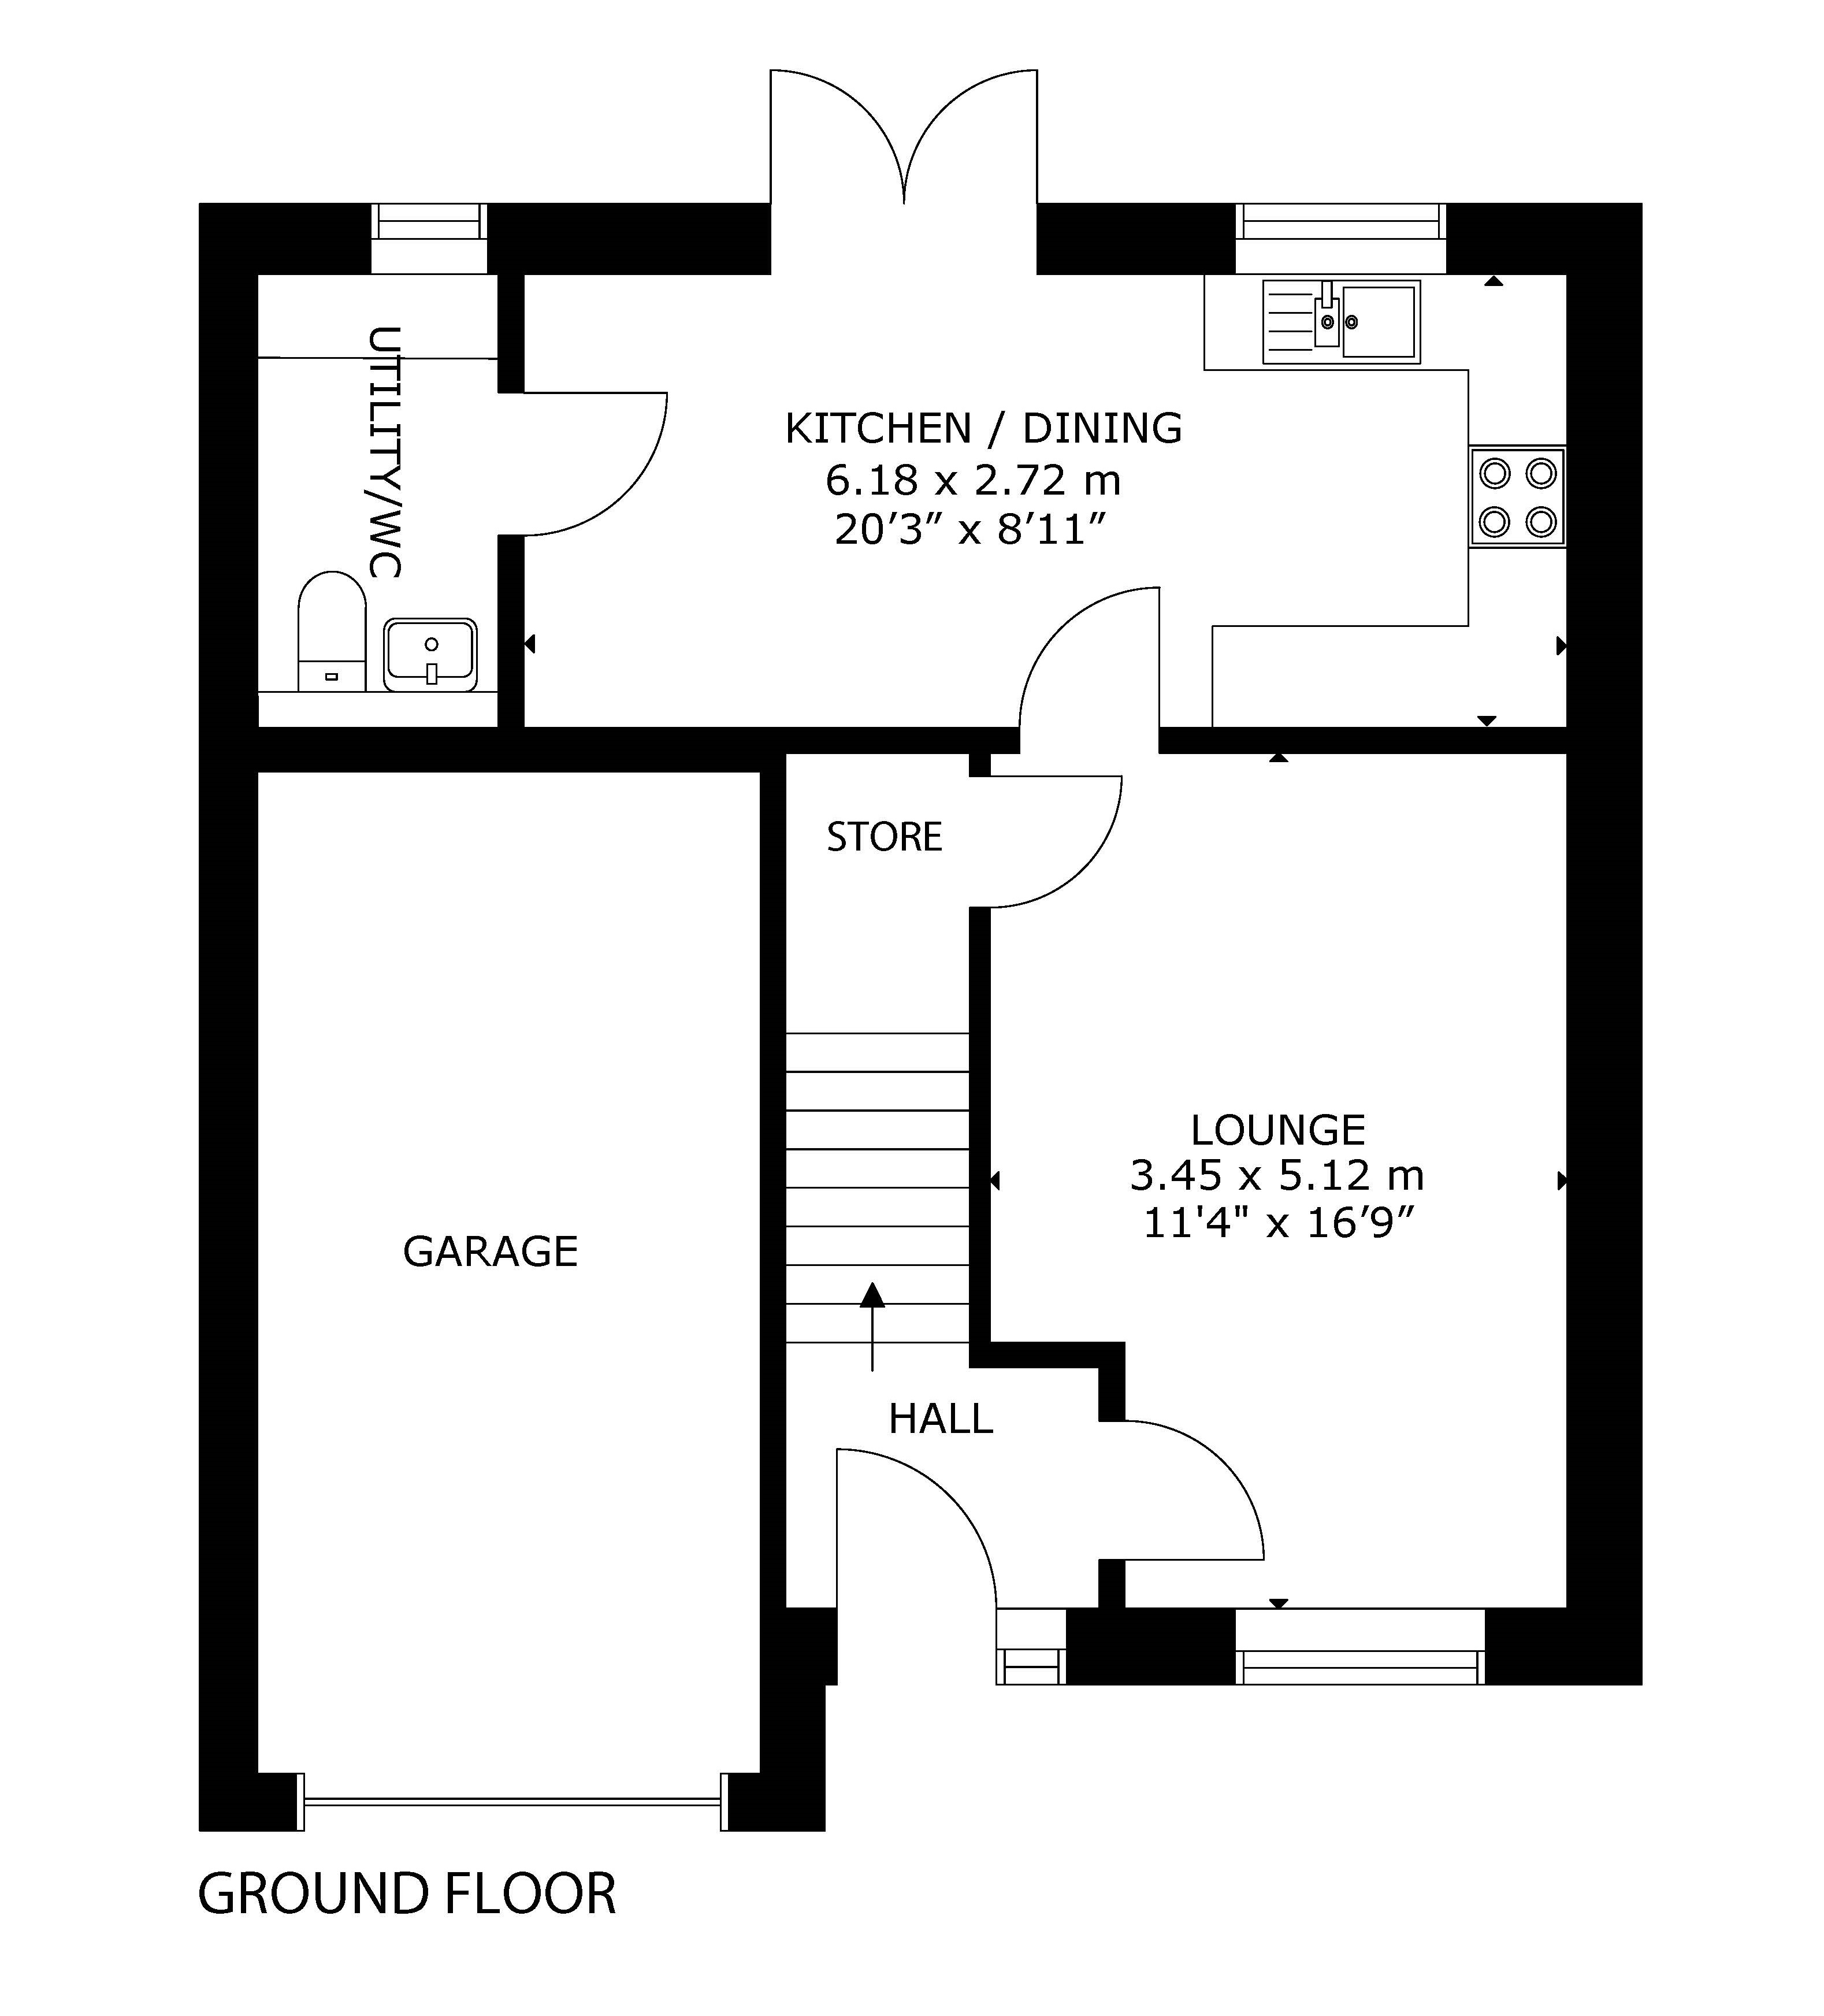 Forth ground floor plan